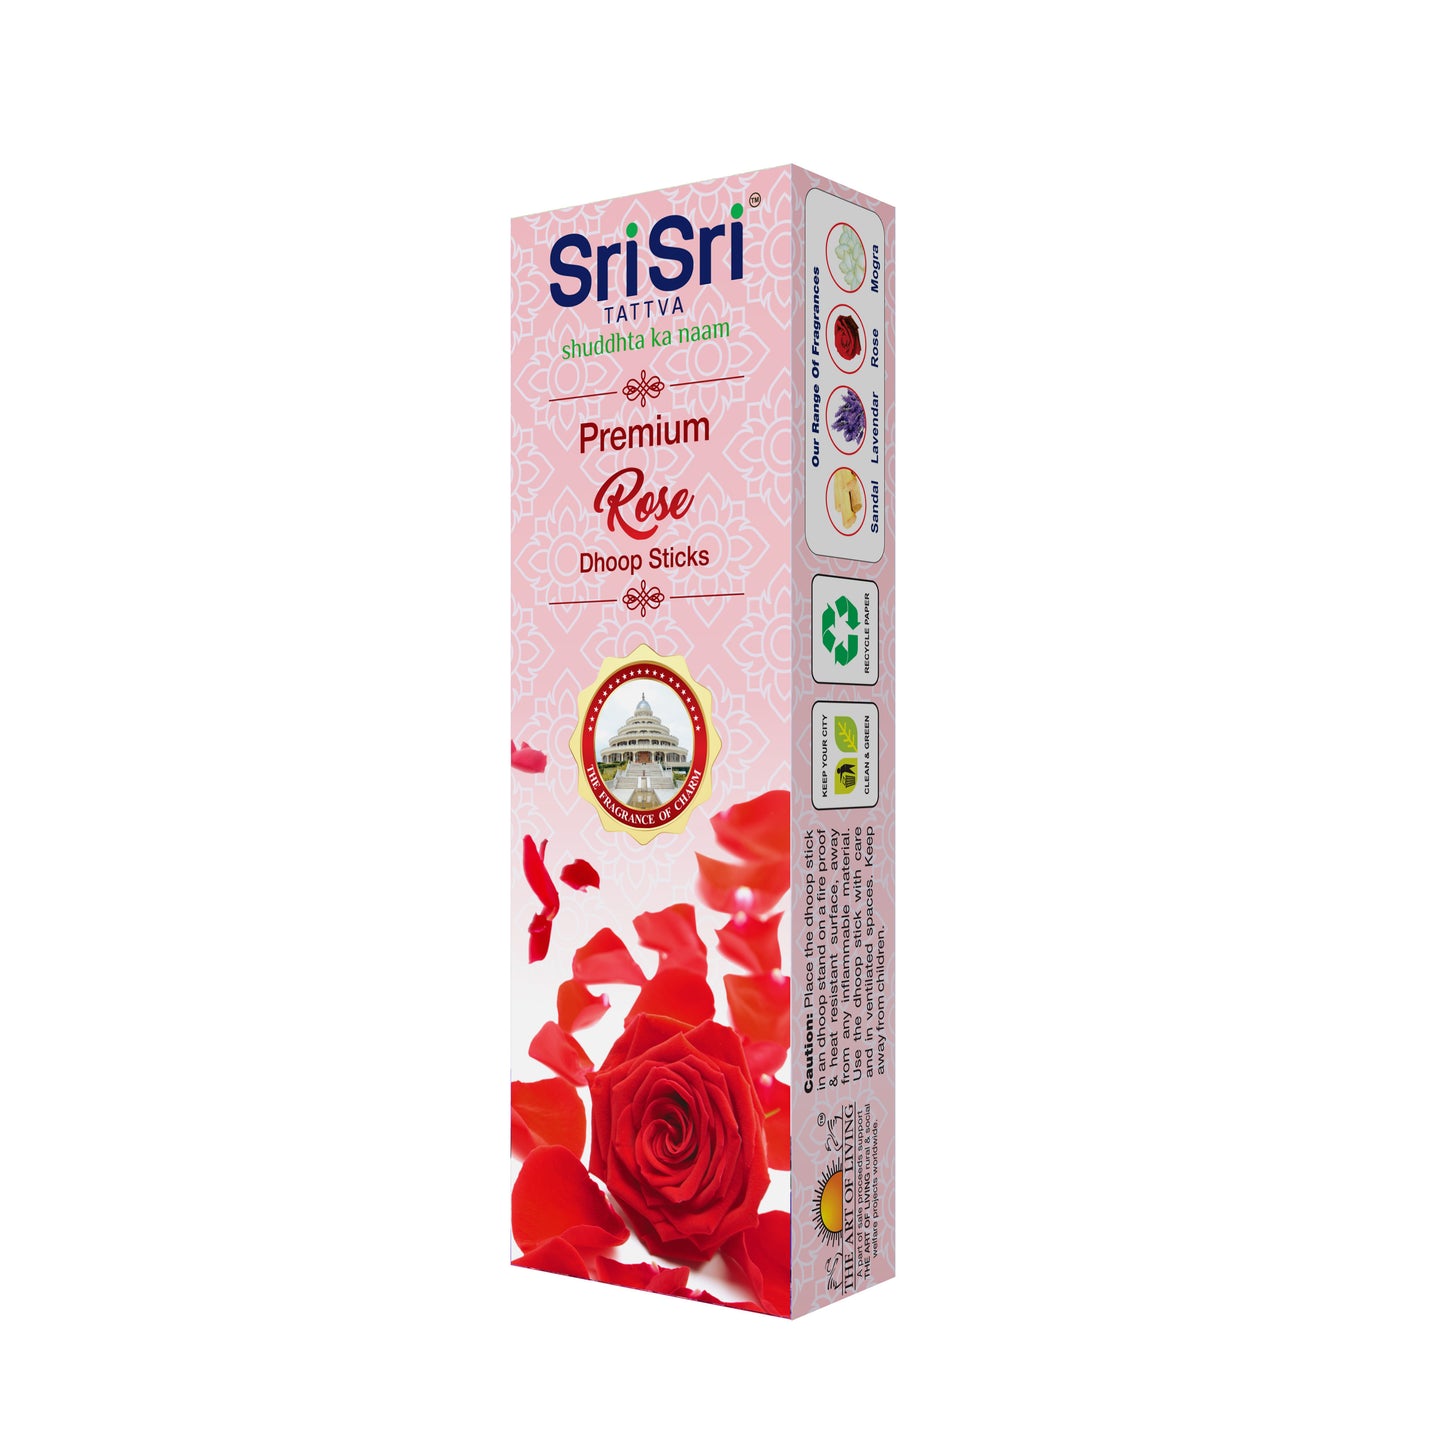 Premium Rose Dhoop Sticks For Pooja | 30 Dhoop Batti / Sticks | Fragrances – Natural Rose | Bamboo-less | Free Stand | 50 g